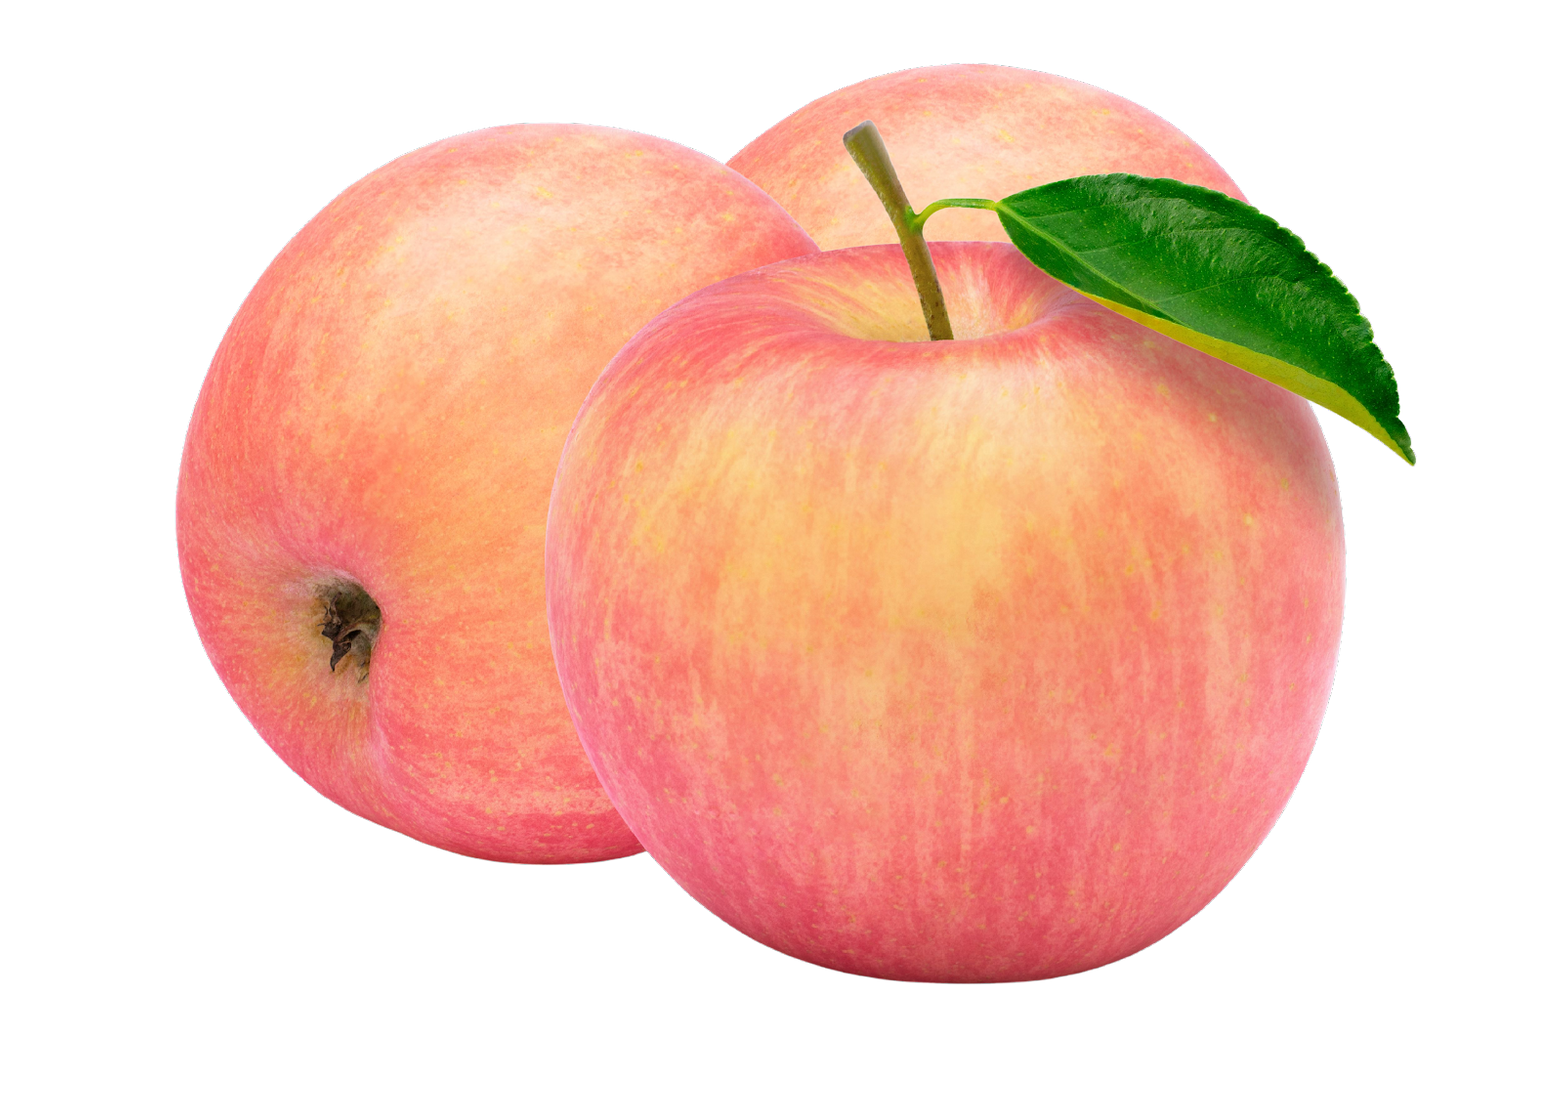 https://pinemelon.com/image/f/12944-organic_fuji_apples_3_pack.jpg?w=1100&h=1100&_c=1702574962